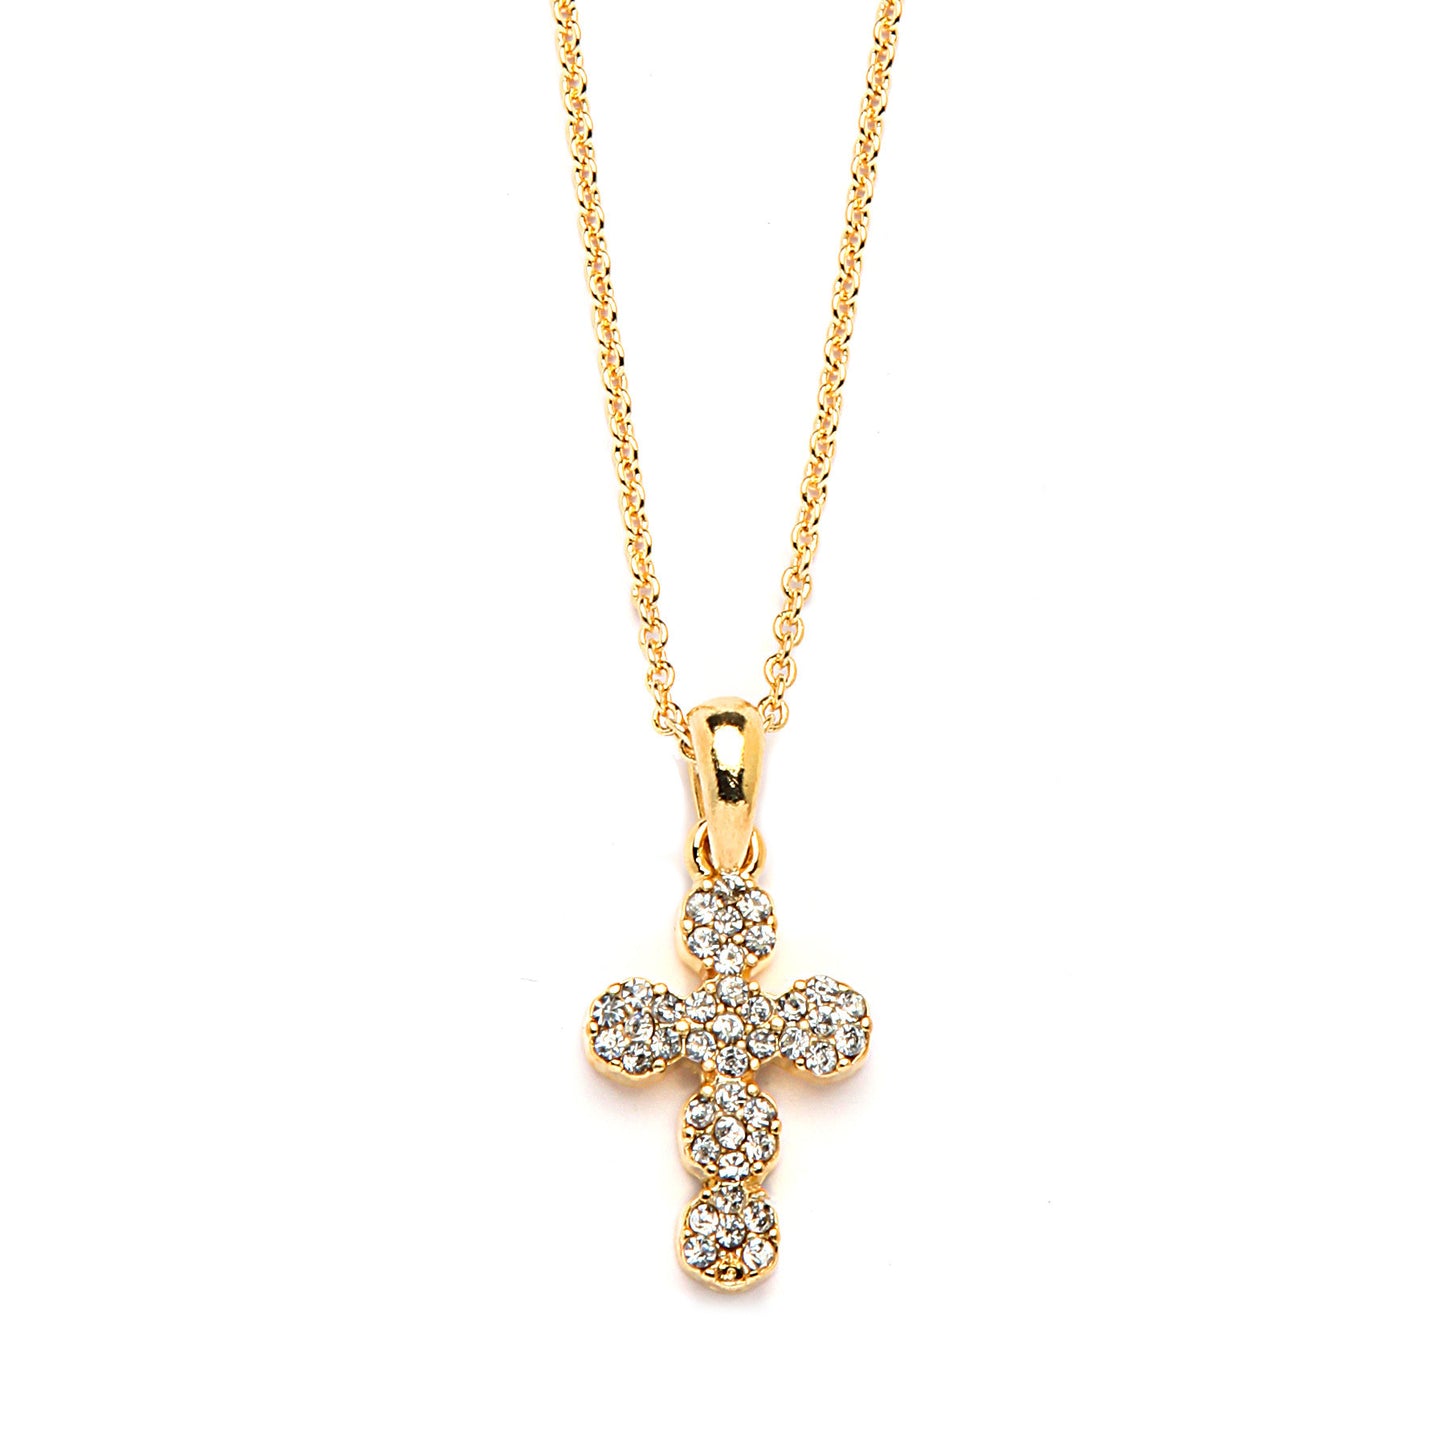 Cross Pendant Necklace with Premium CZ